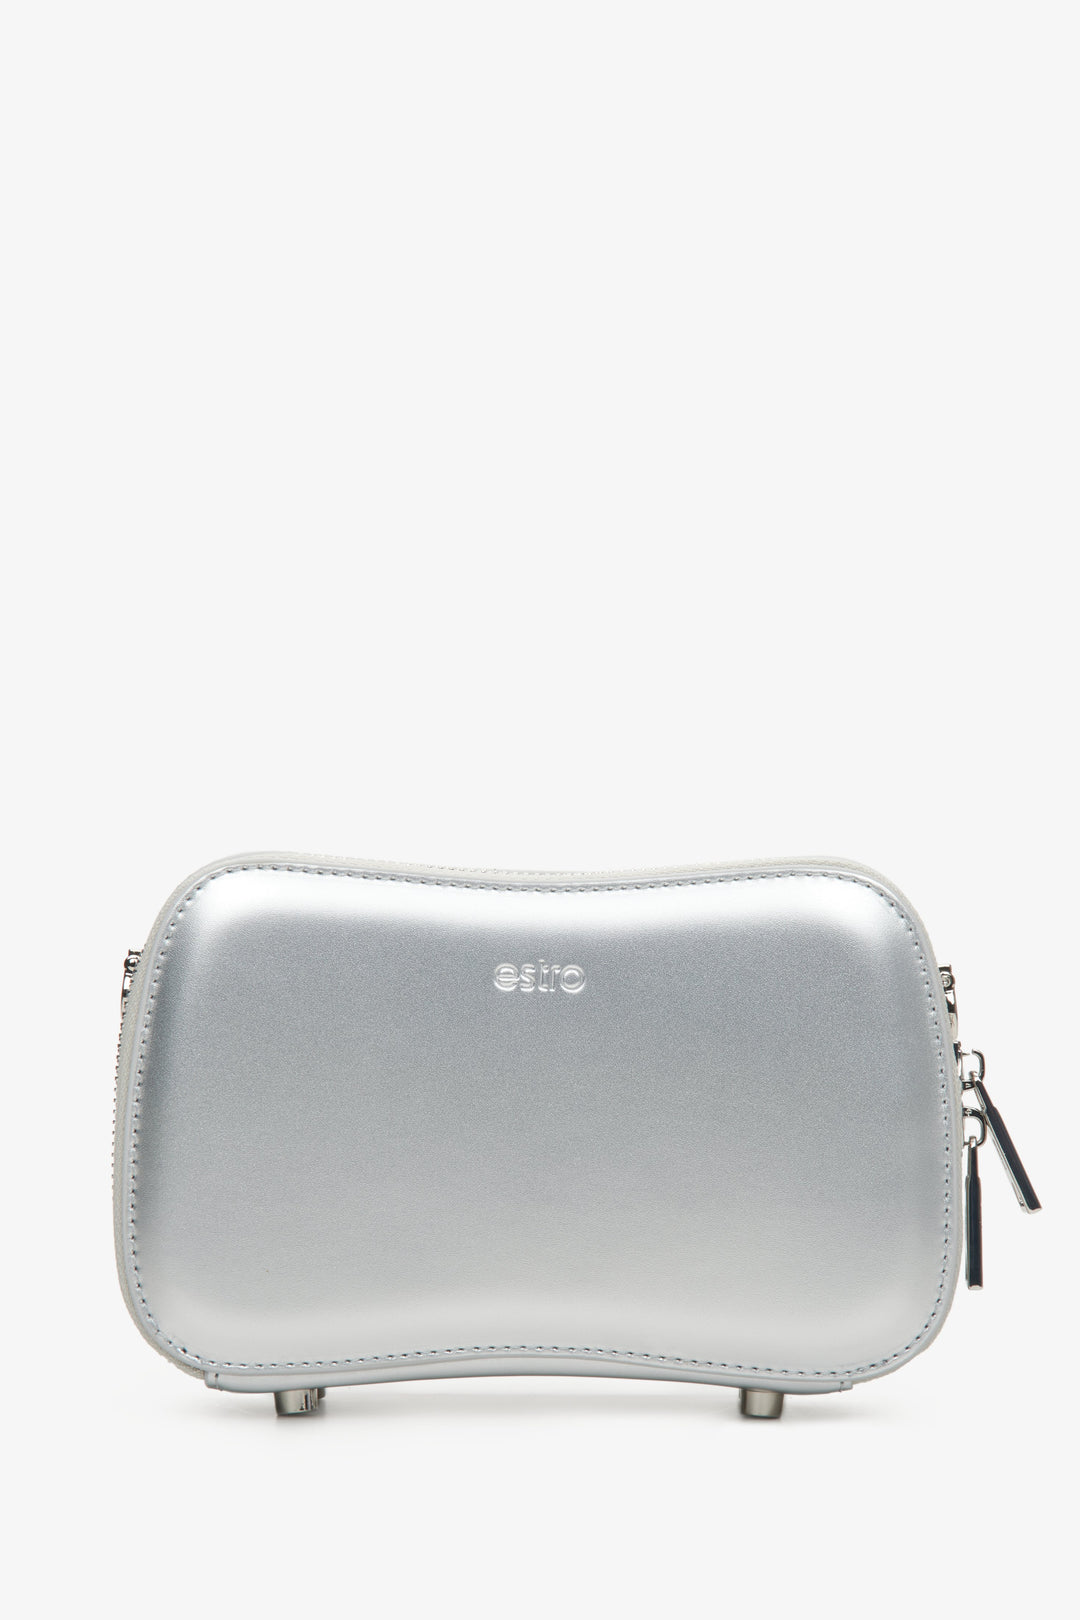 Small women's handbag made of genuine silver leather by Estro.